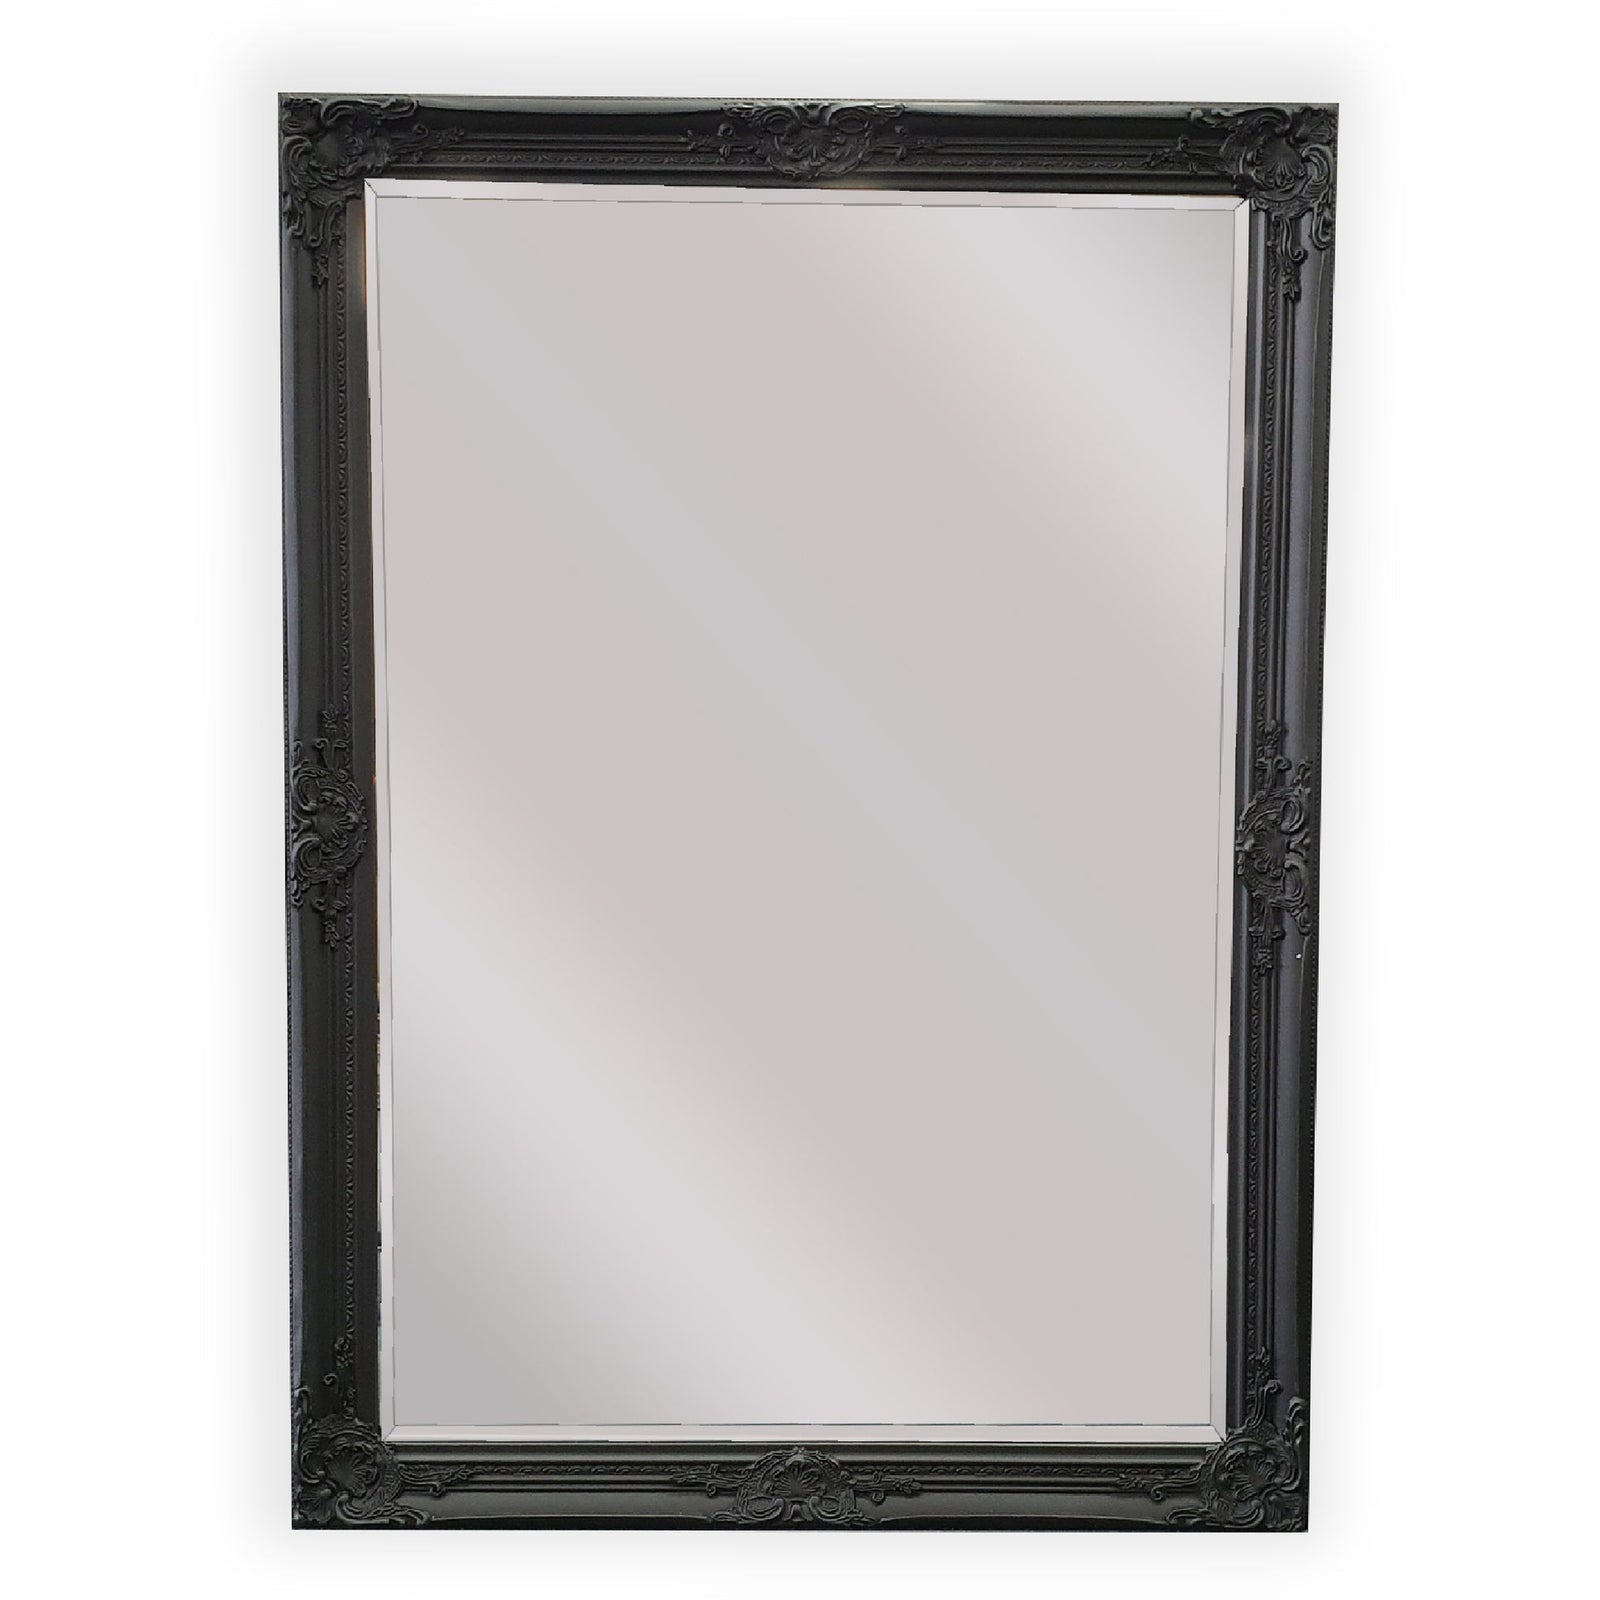 French Provincial Ornate Mirror - Black - Small 80cm x 110cm